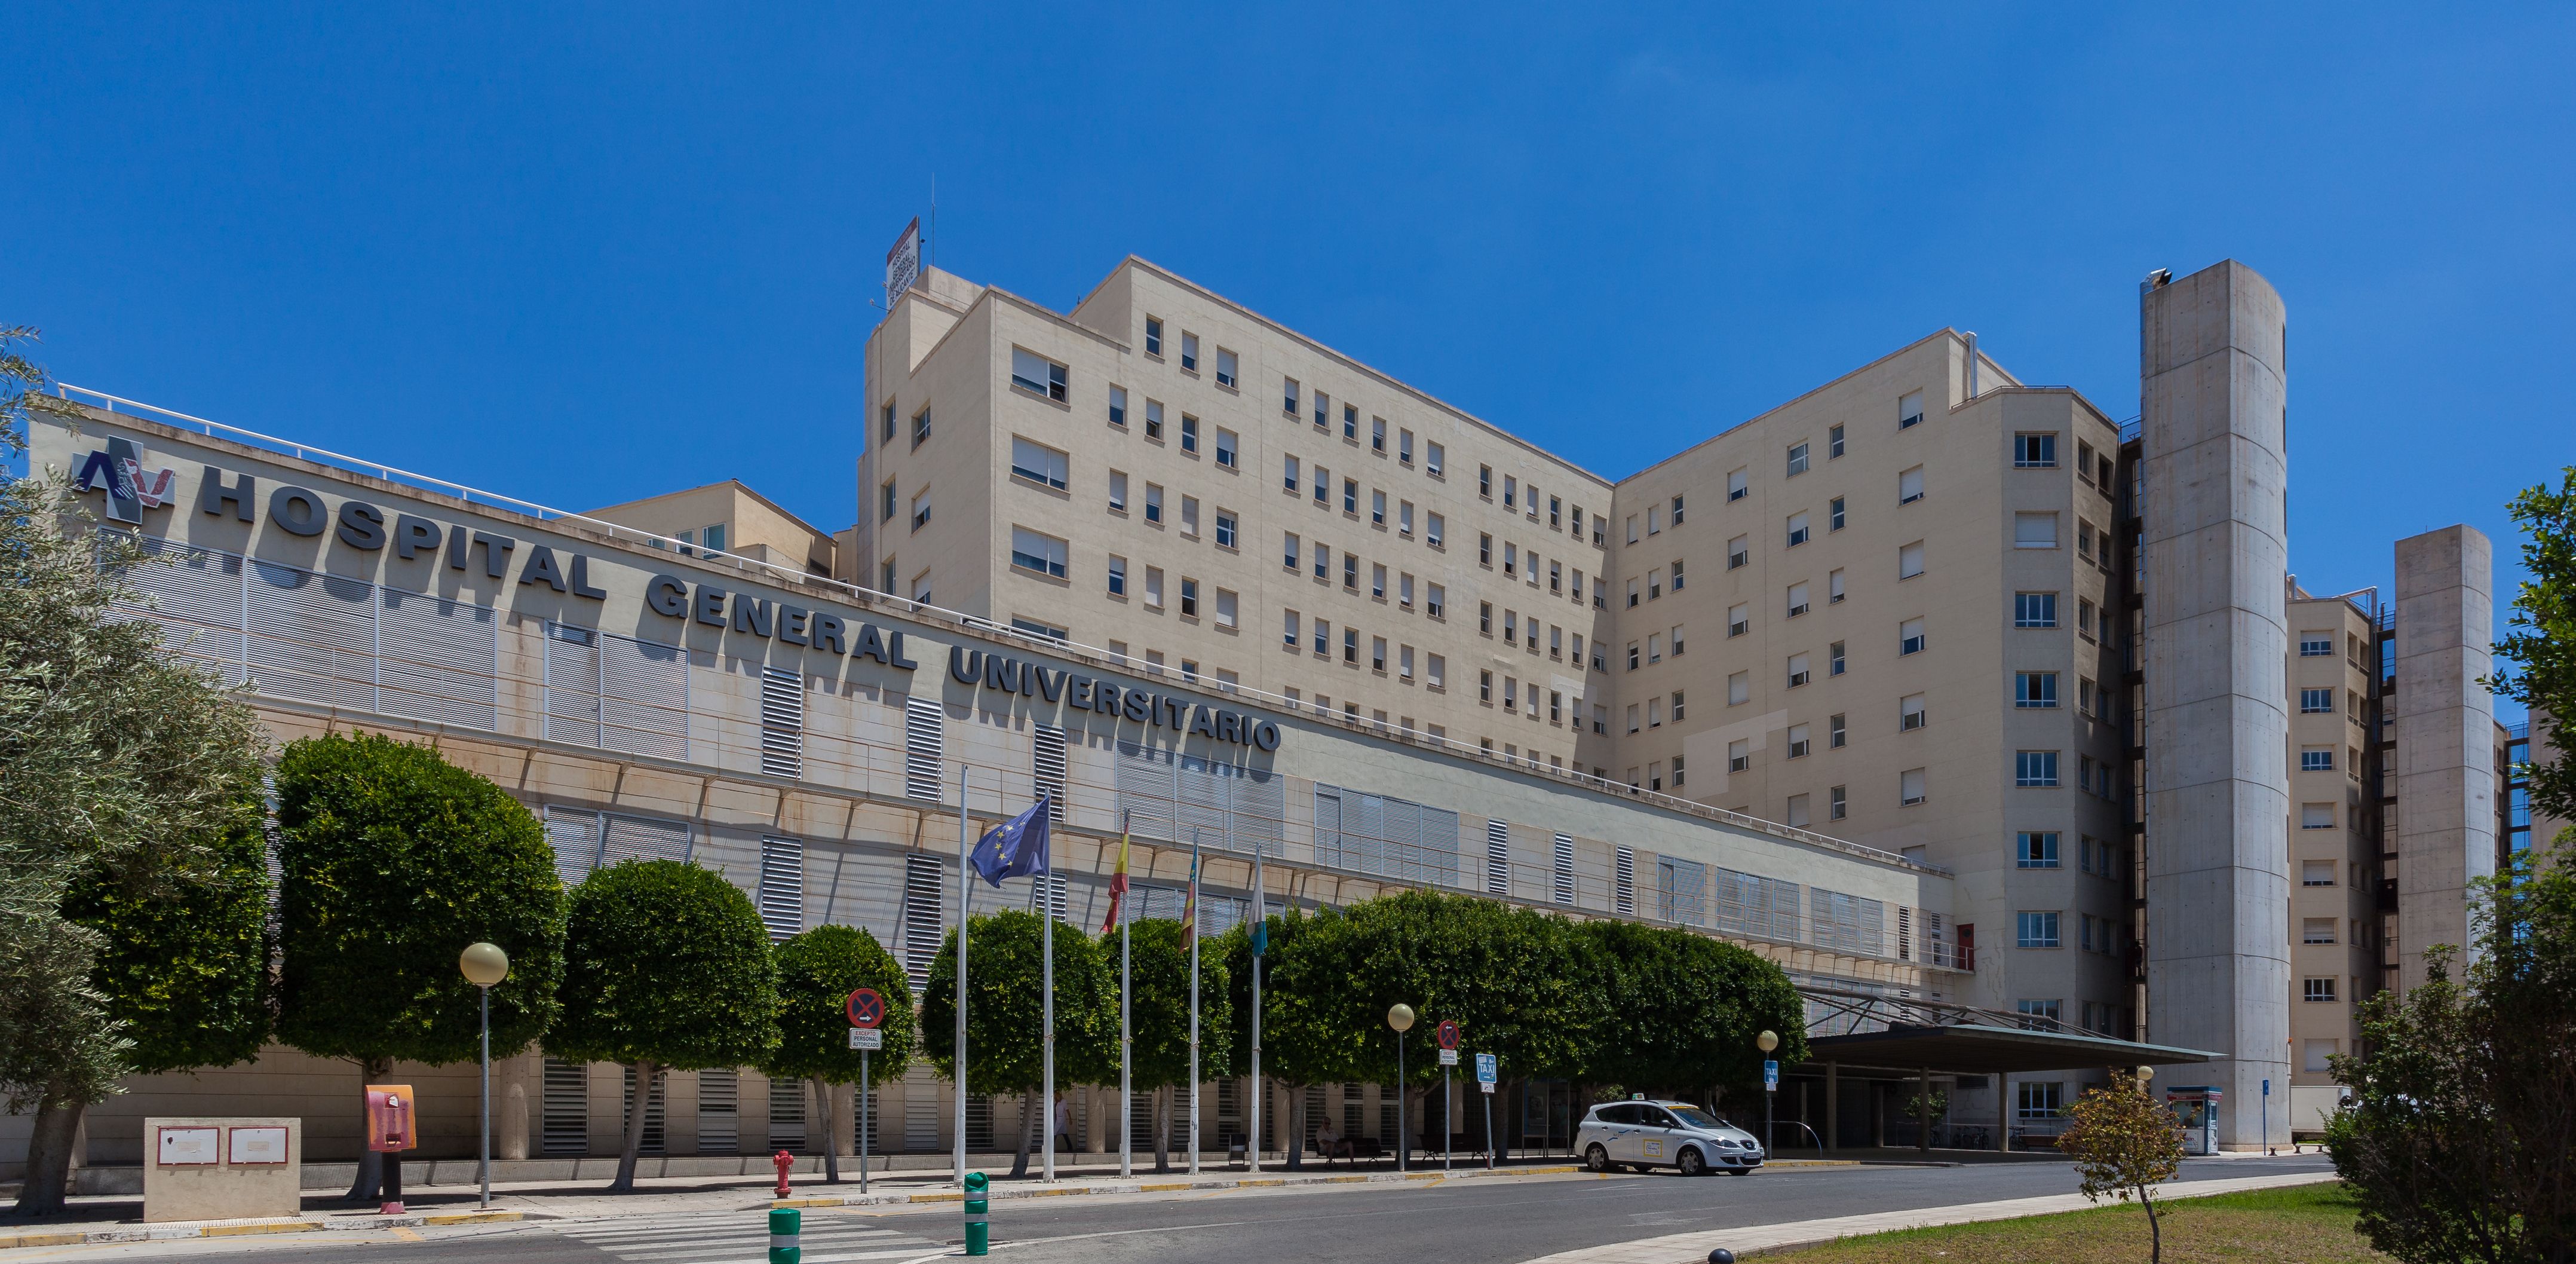 Hospital General Universitari d'Alacant / Wikimedia Commons